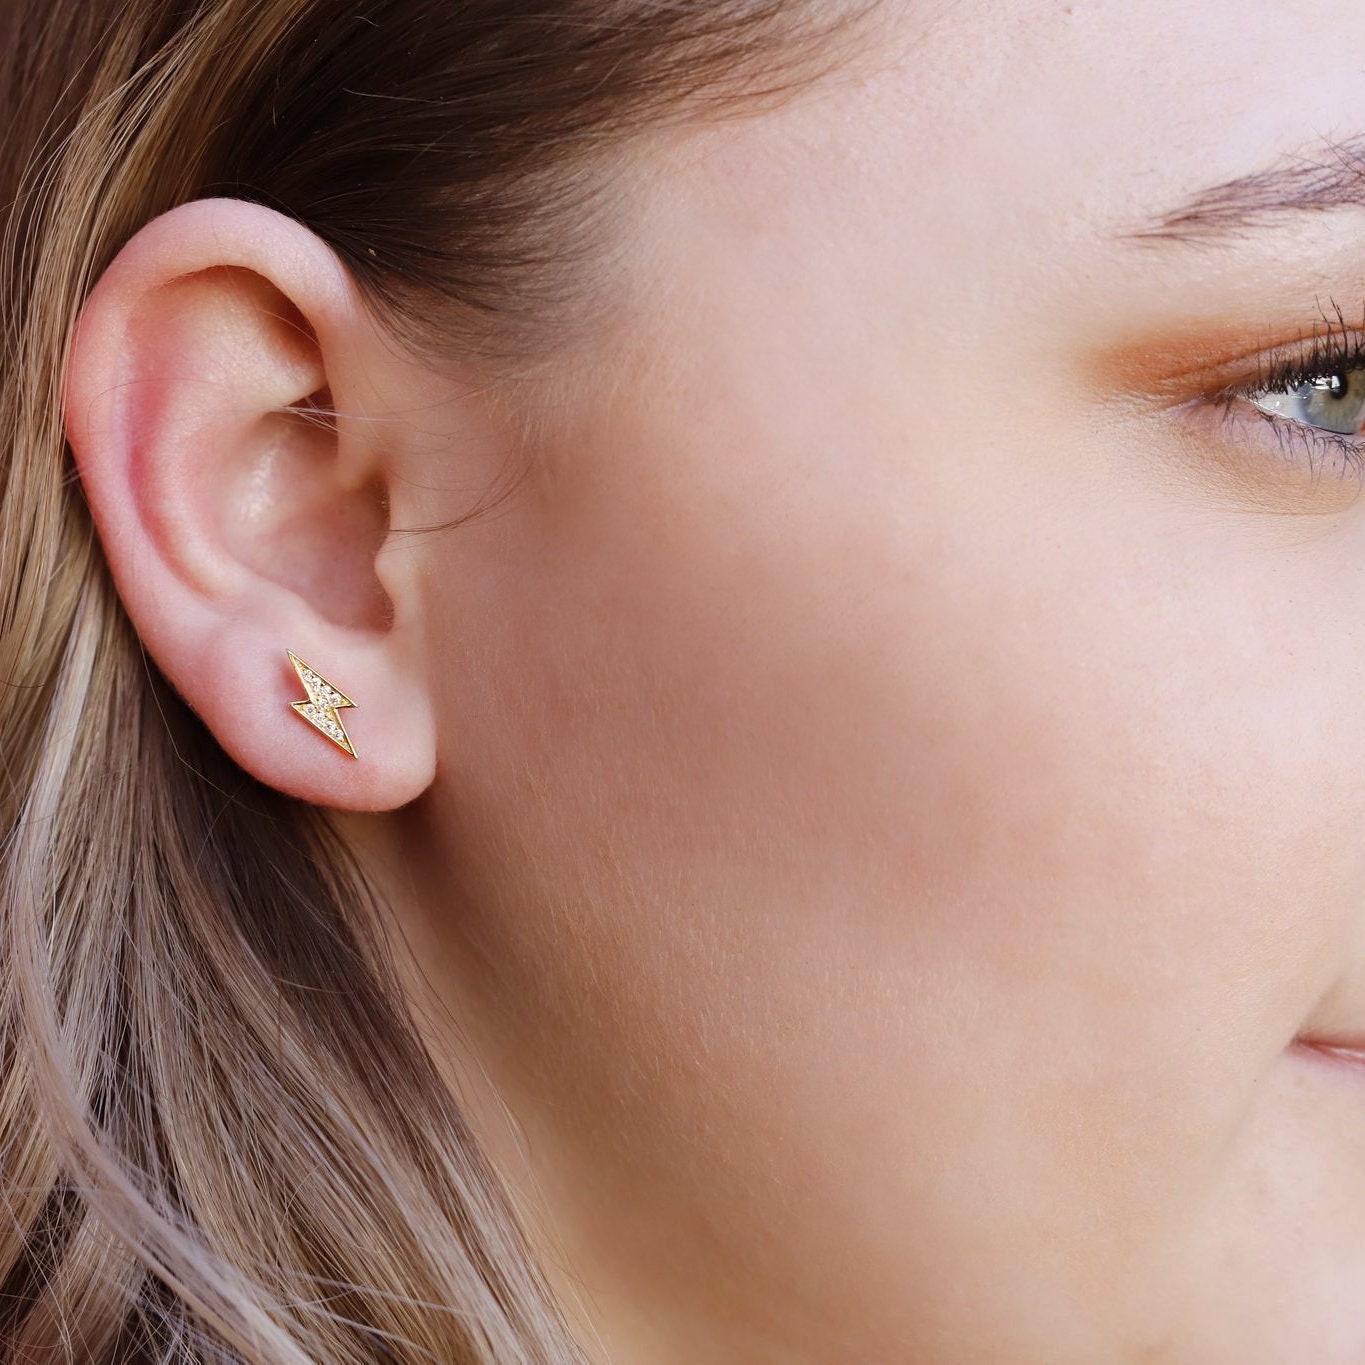 Tiny Stud Earrings - New Minimalist Earrings - Minimalist Earrings Spark- Studs - Tiny Earrings - Earrings Sets for Multiple Piercings